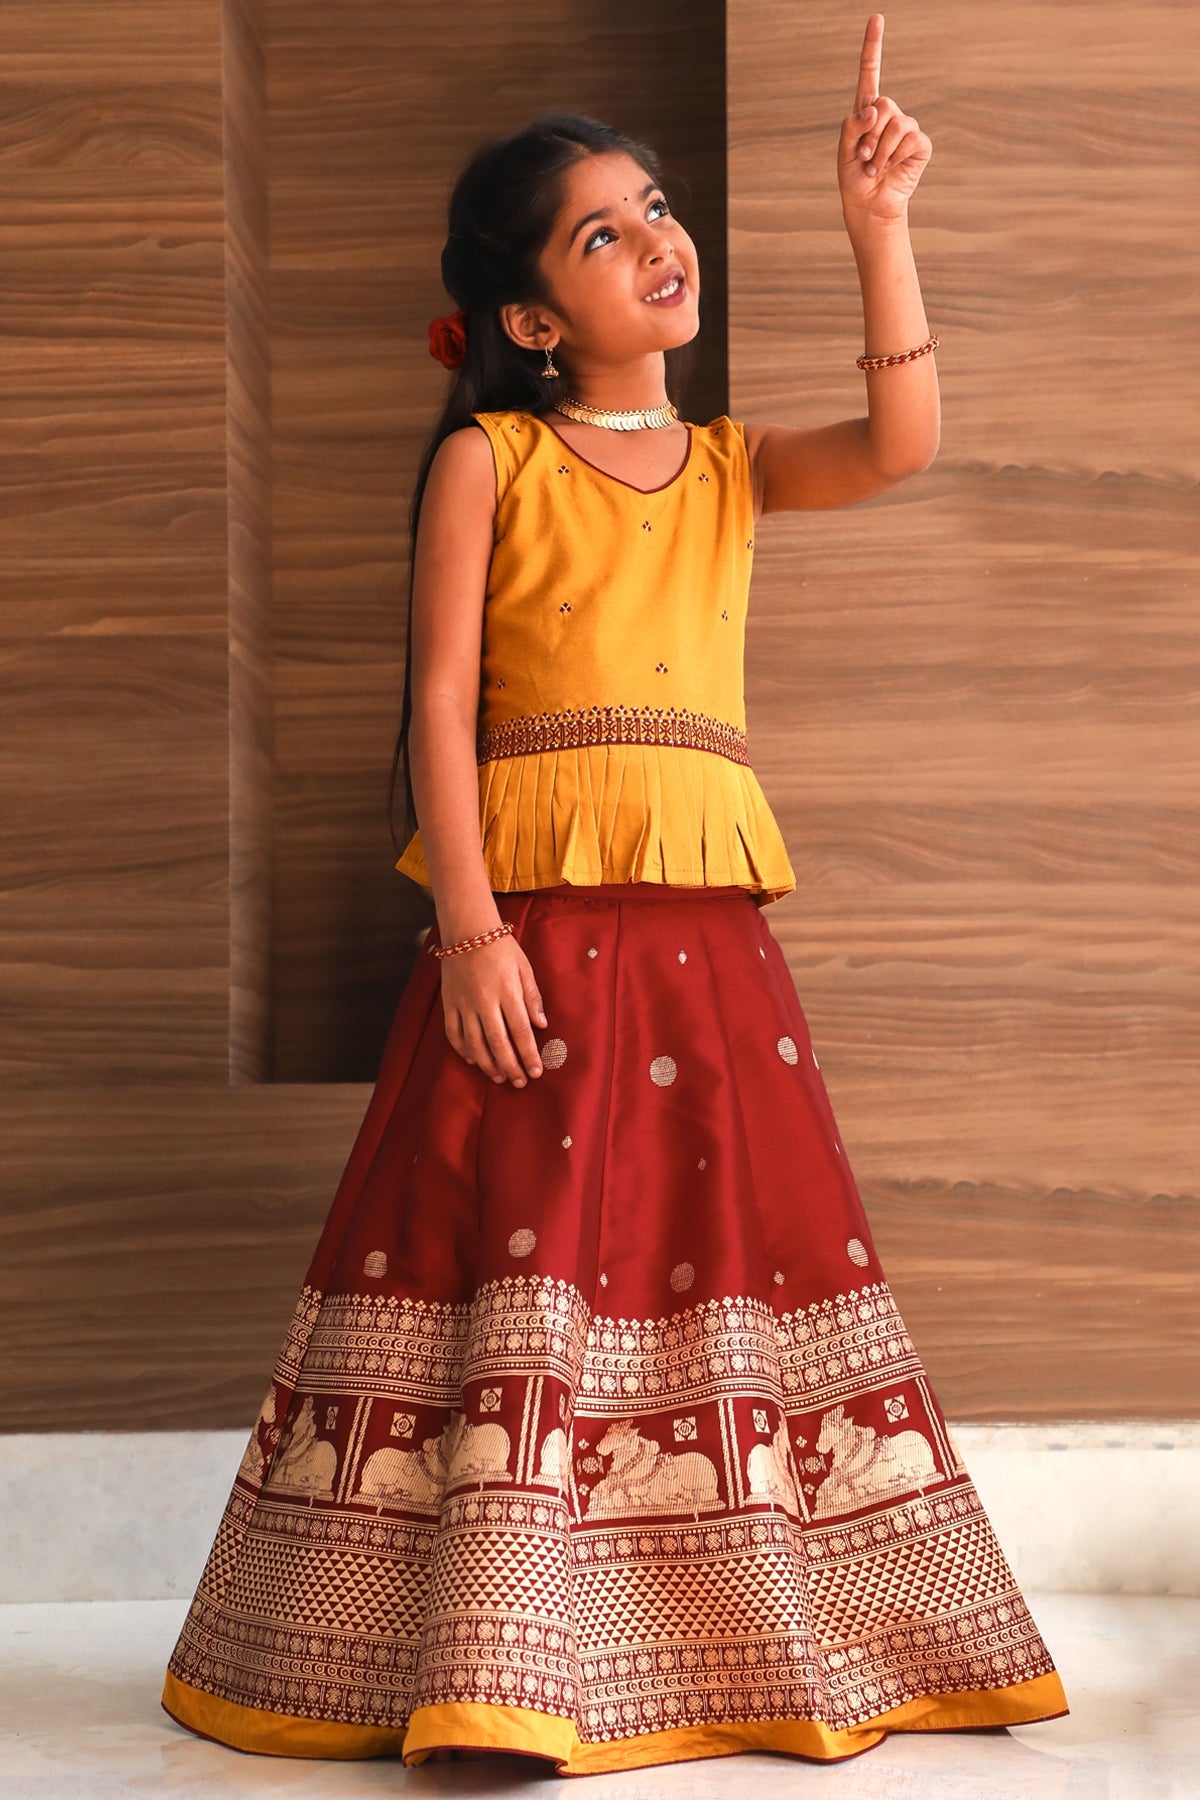 All Over Ethnic Motif Embroidered Sleeveless Top & Nandhi Motif Printed Skirt Set - Mustard & Maroon